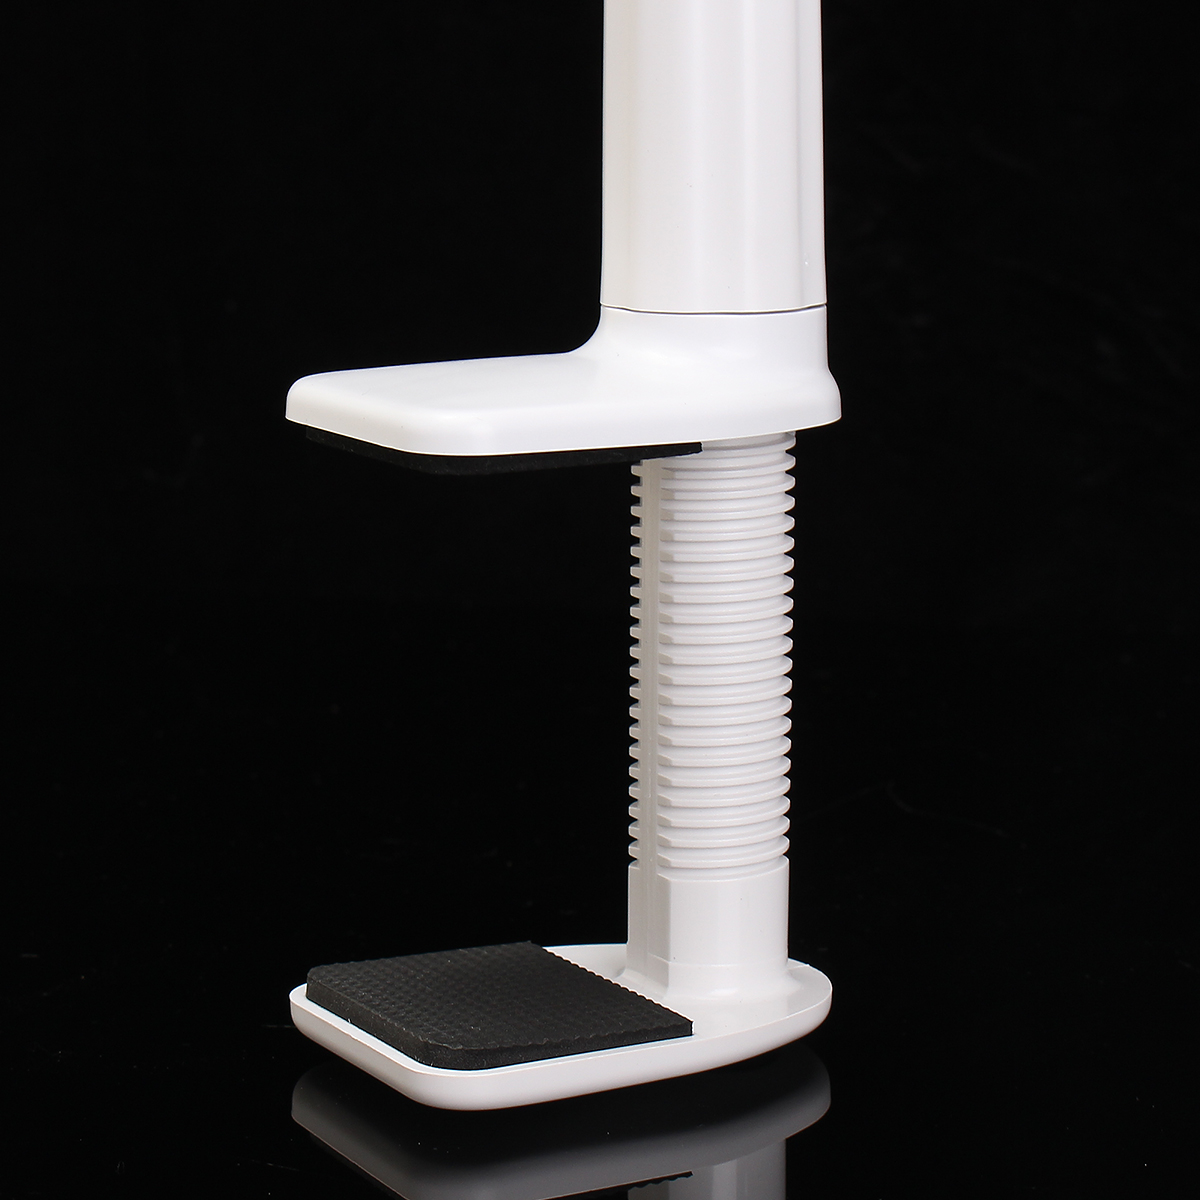 Bakeey-Universal-Flexible-360-Degree-Rotation-Long-Arm-Lazy-Phone-Holder-Bed-Desktop-Table-Mount-Bra-1662765-10